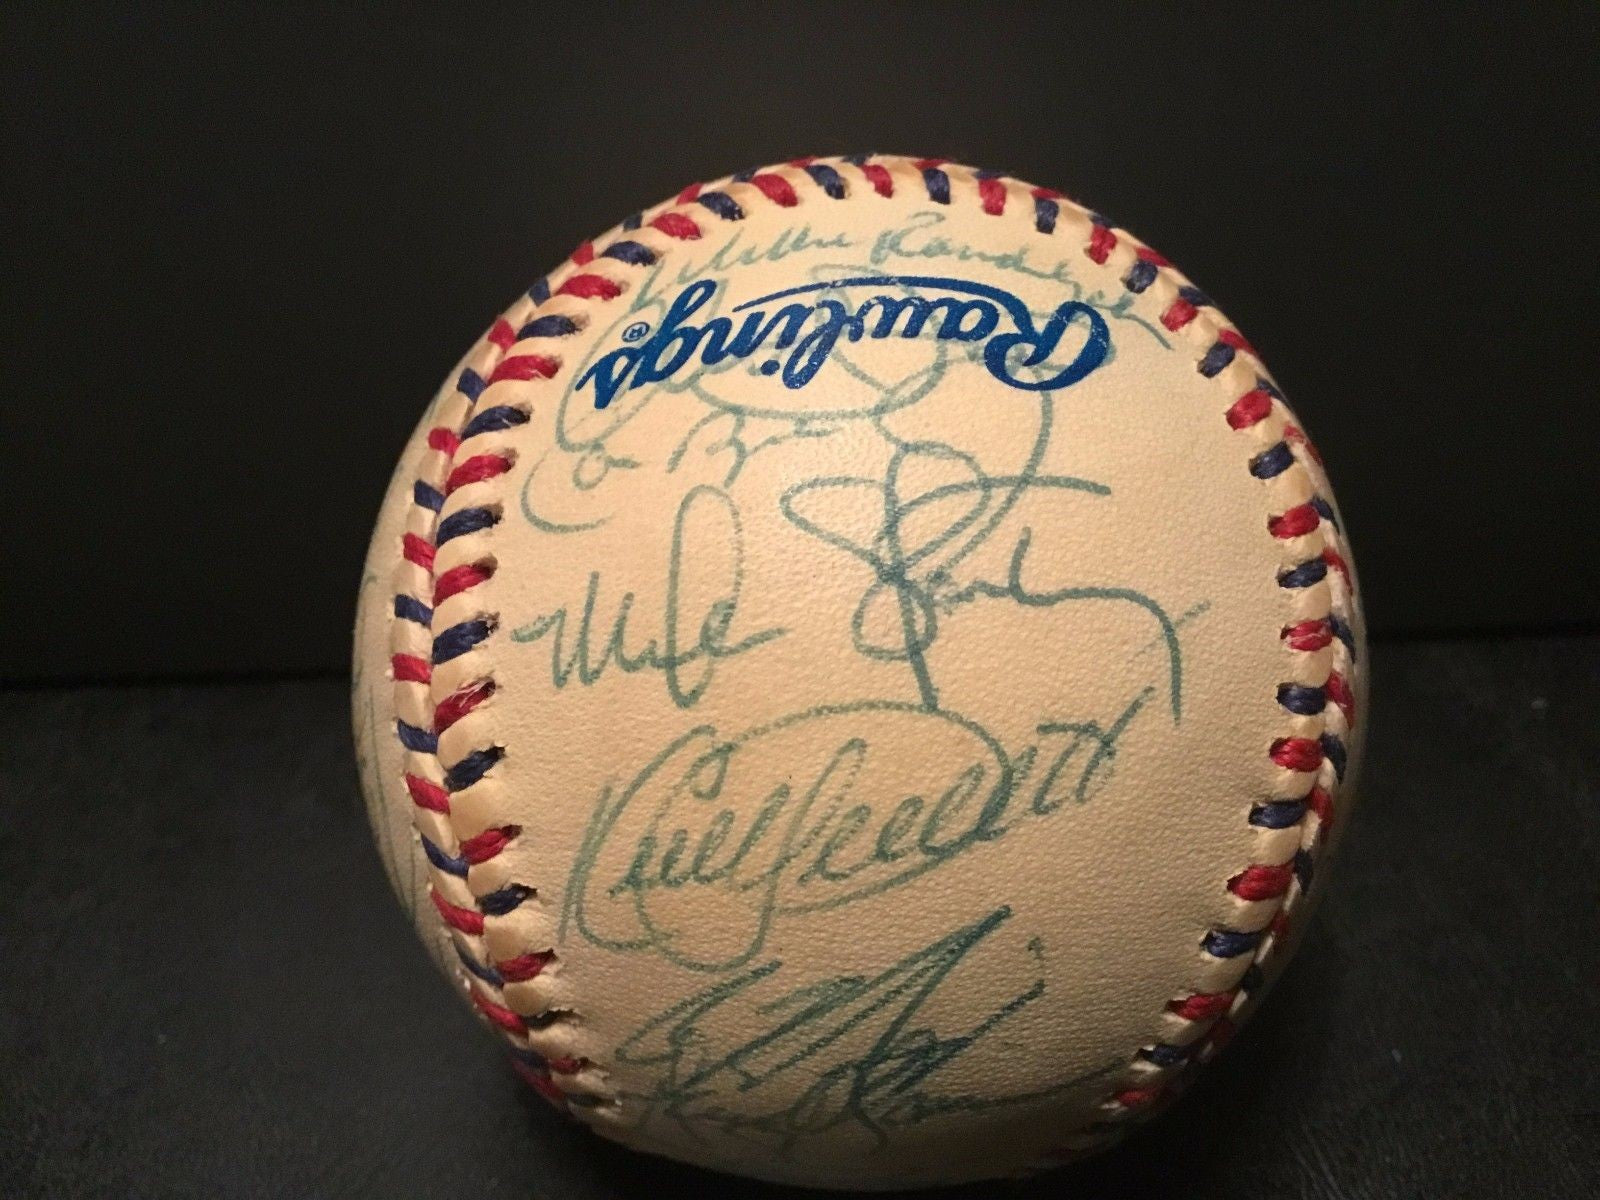 1995 American League All-Star Team autographed baseball (Kirby Puckett Cal Ripken Frank Thomas) JSA